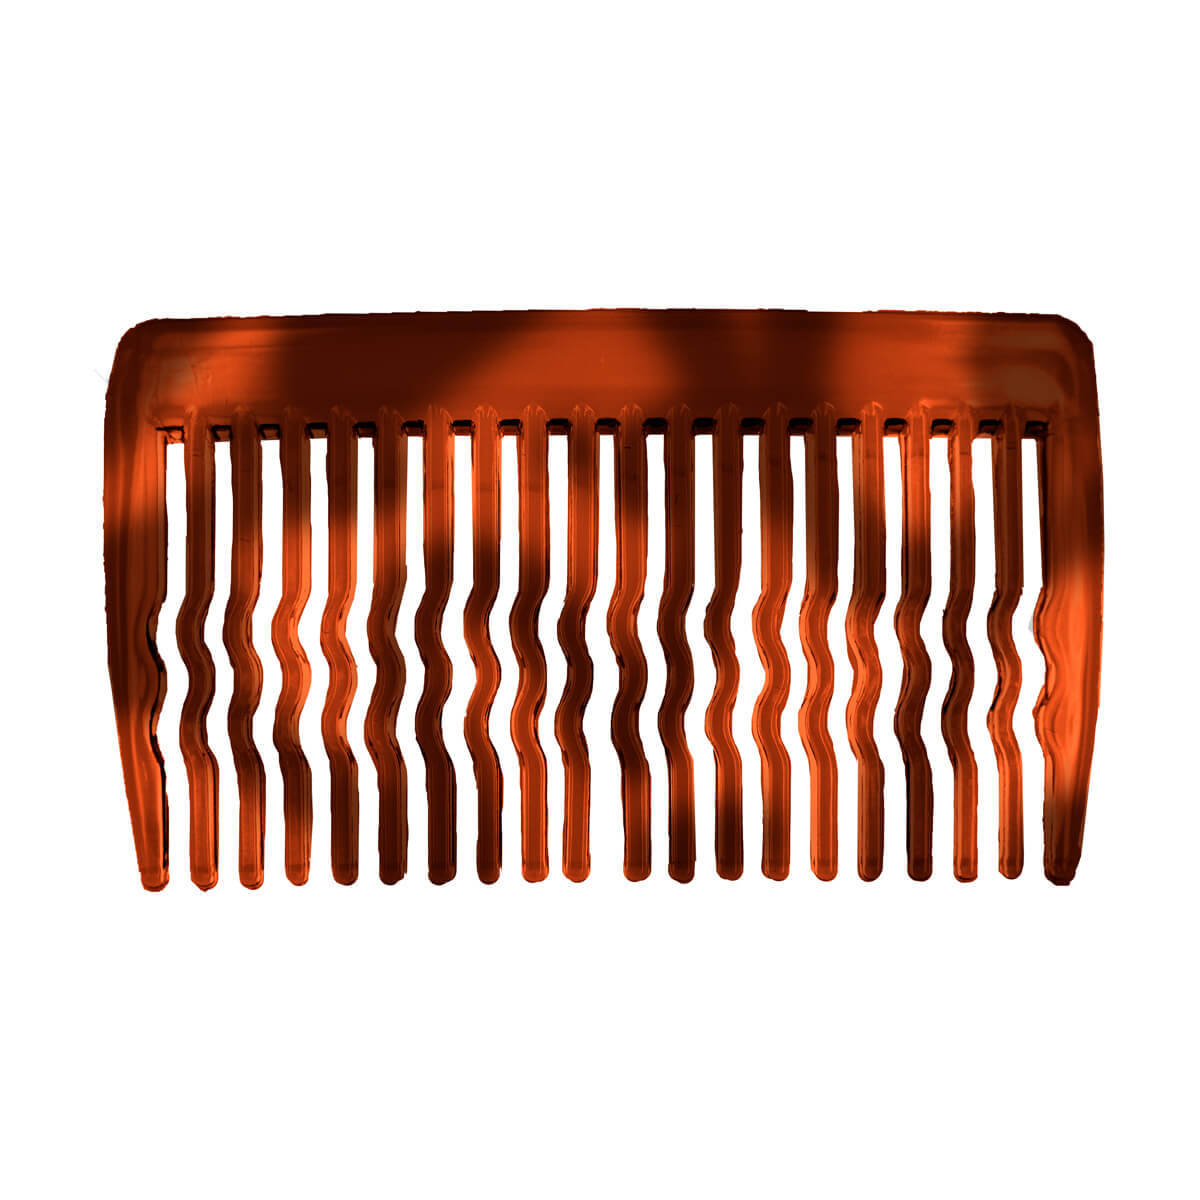 Plastic side comb 2pcs (6.3cm x 3.6cm)